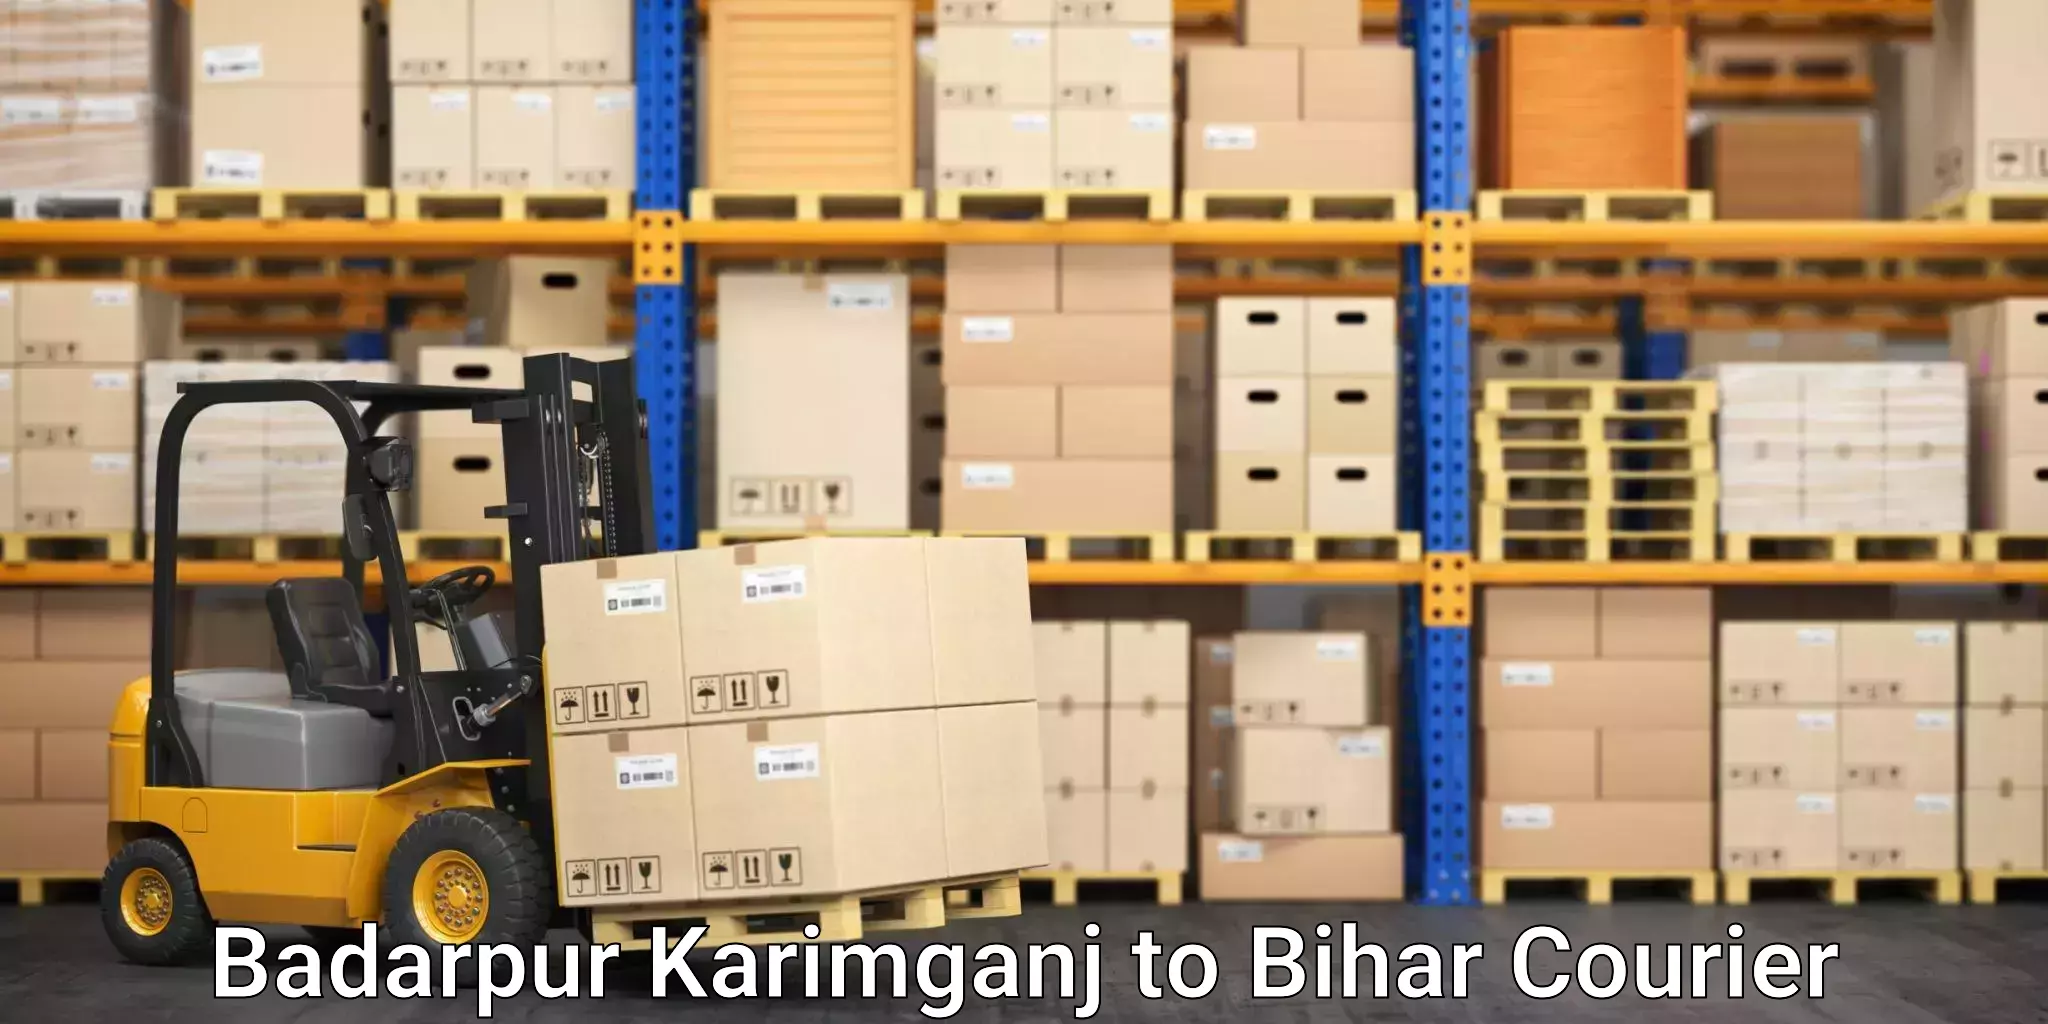 Express delivery solutions Badarpur Karimganj to Bihar